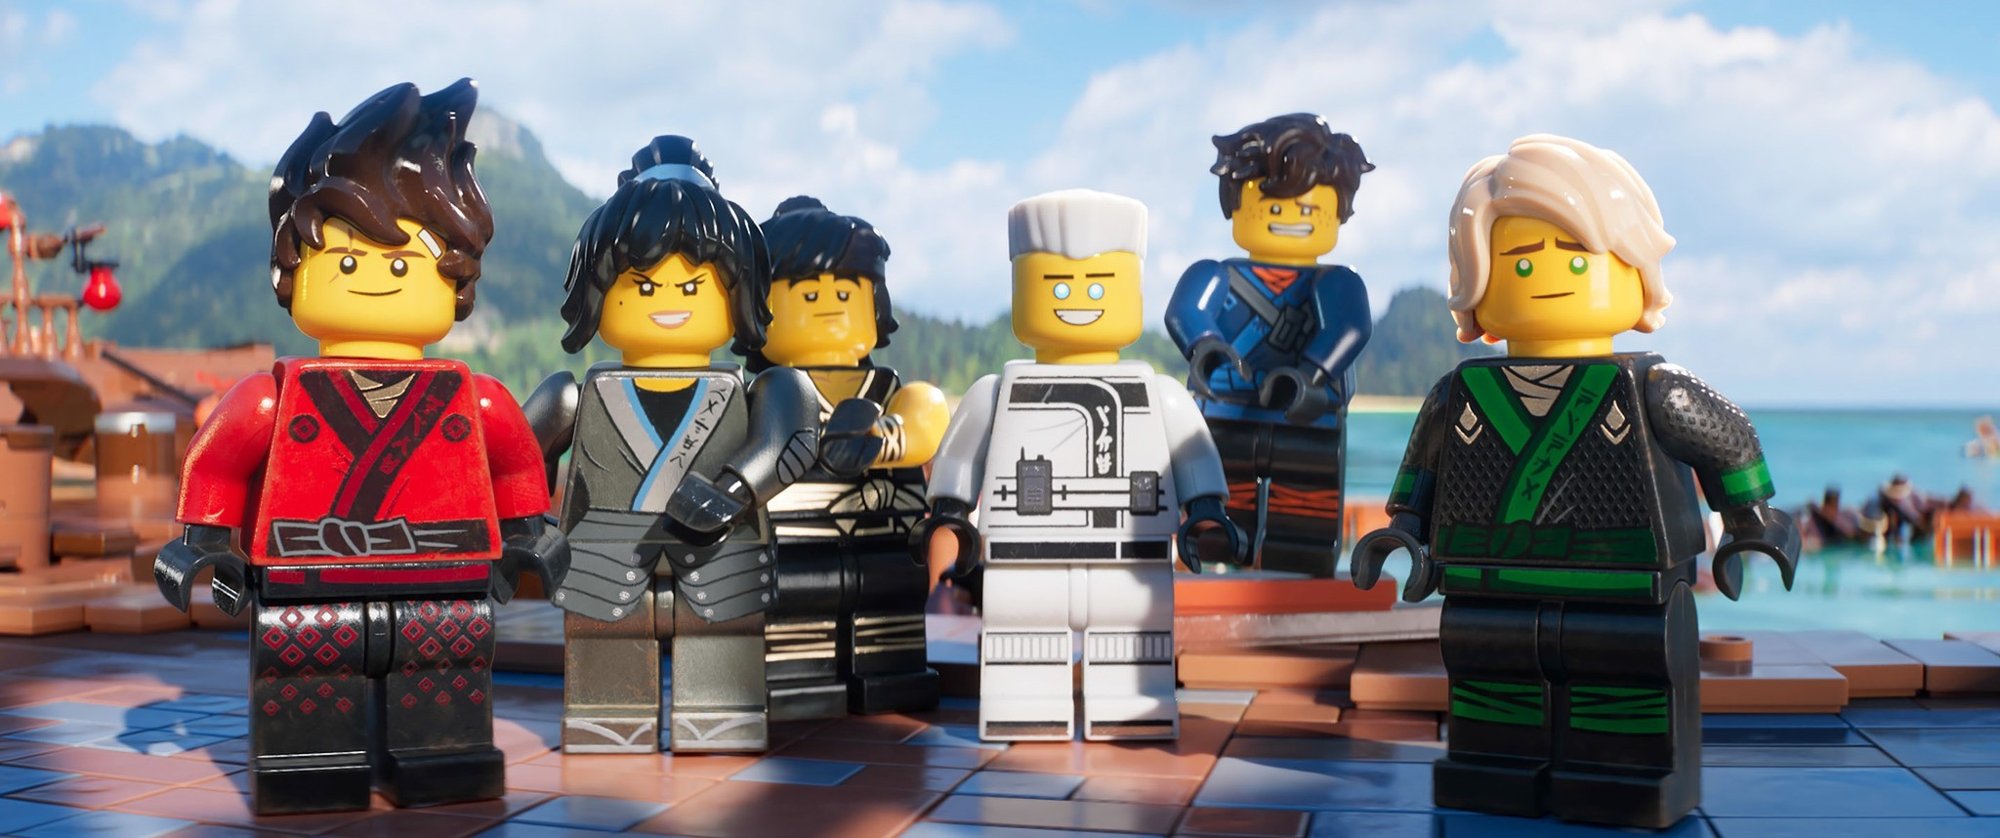 Kai, Nya, Cole, Zane, Jay and Lloyd from Warner Bros. Pictures' The Lego Ninjago Movie (2017)